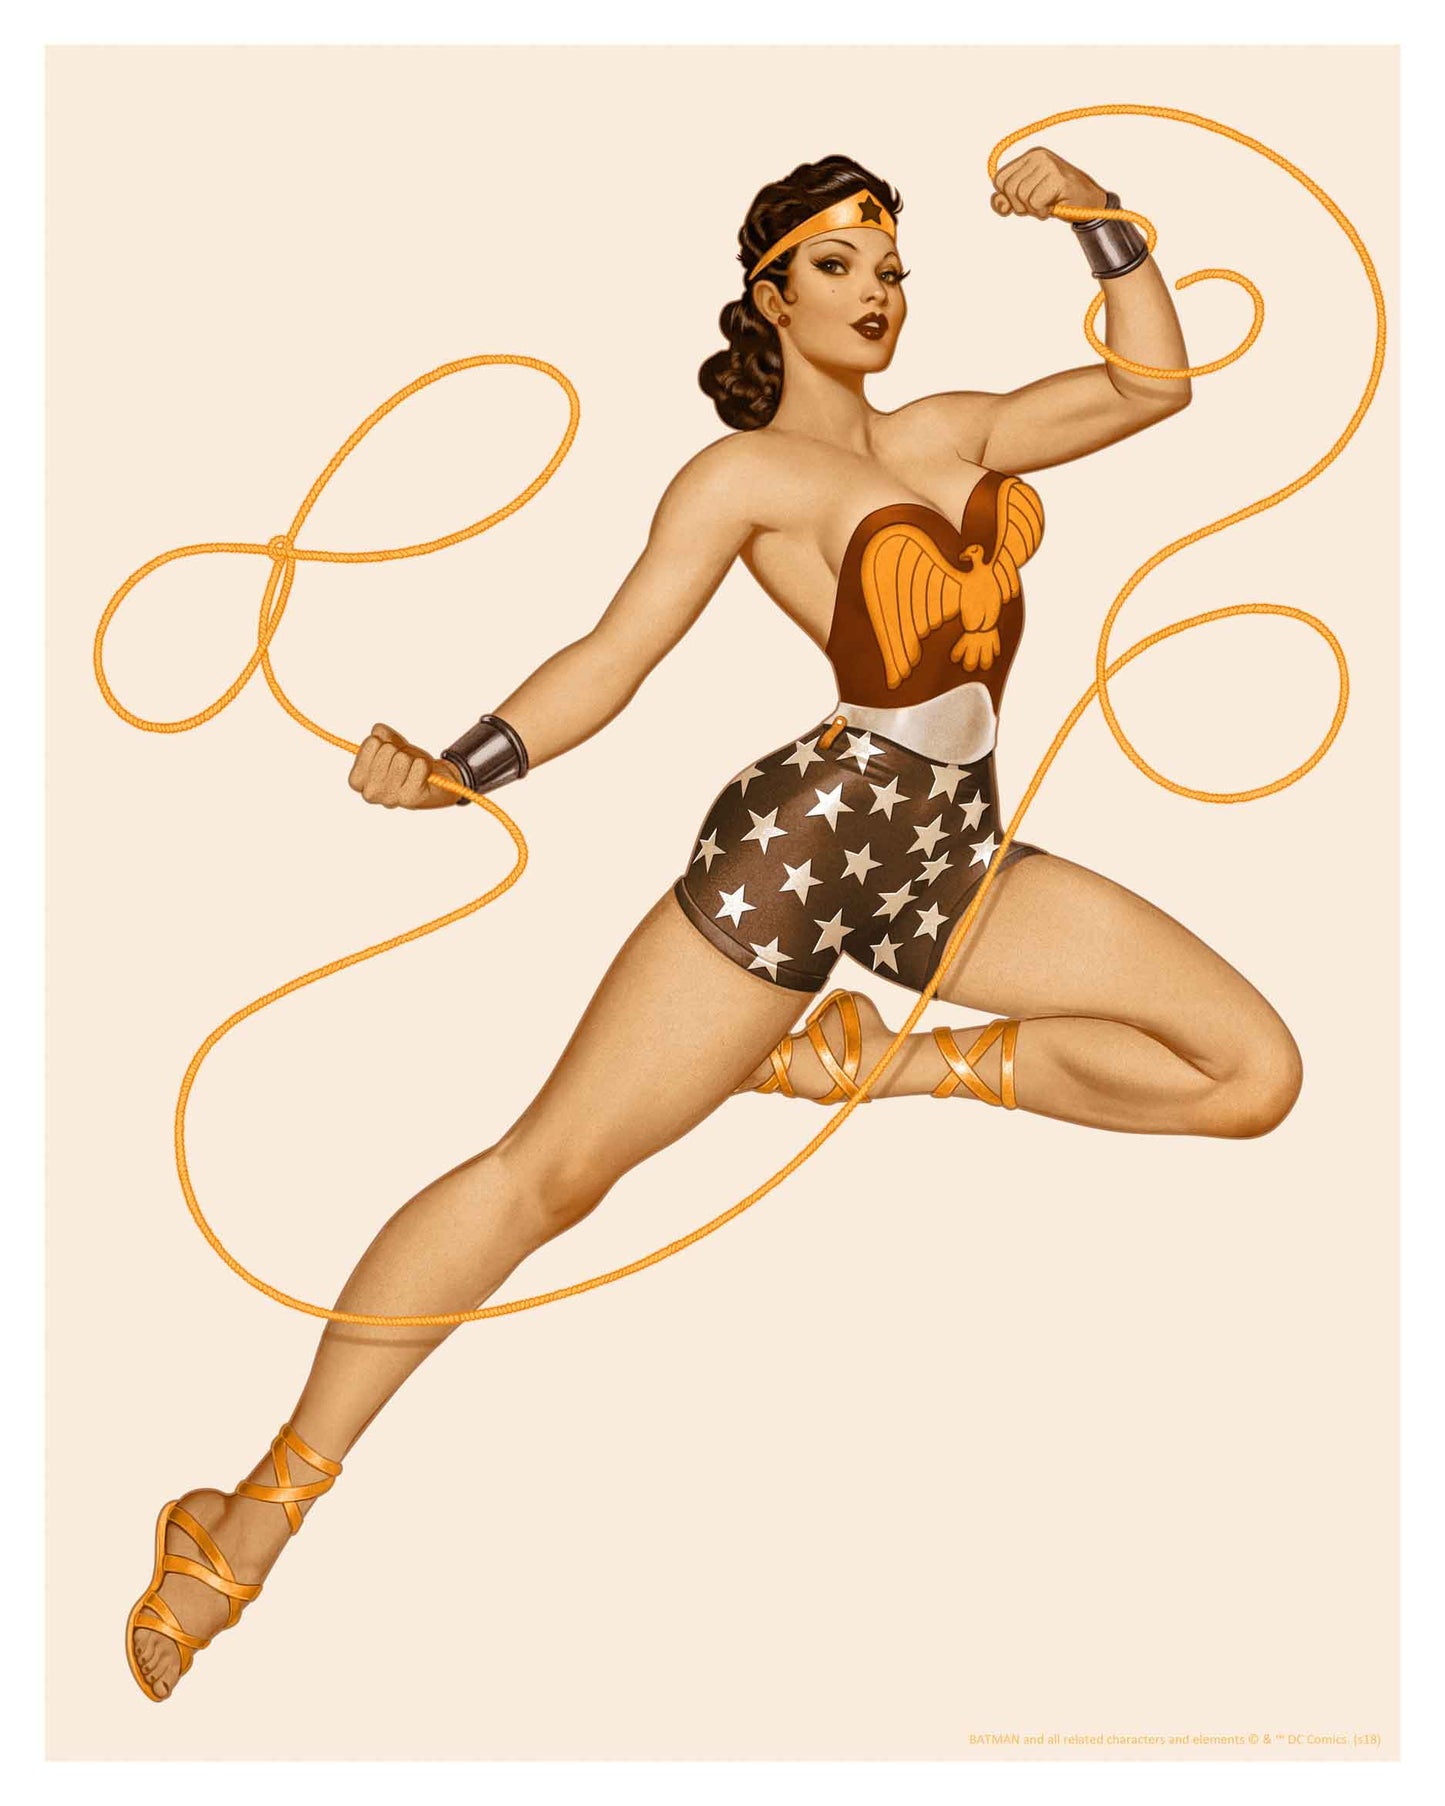 John Keaveney "Wonder Woman - Sensation Comics"